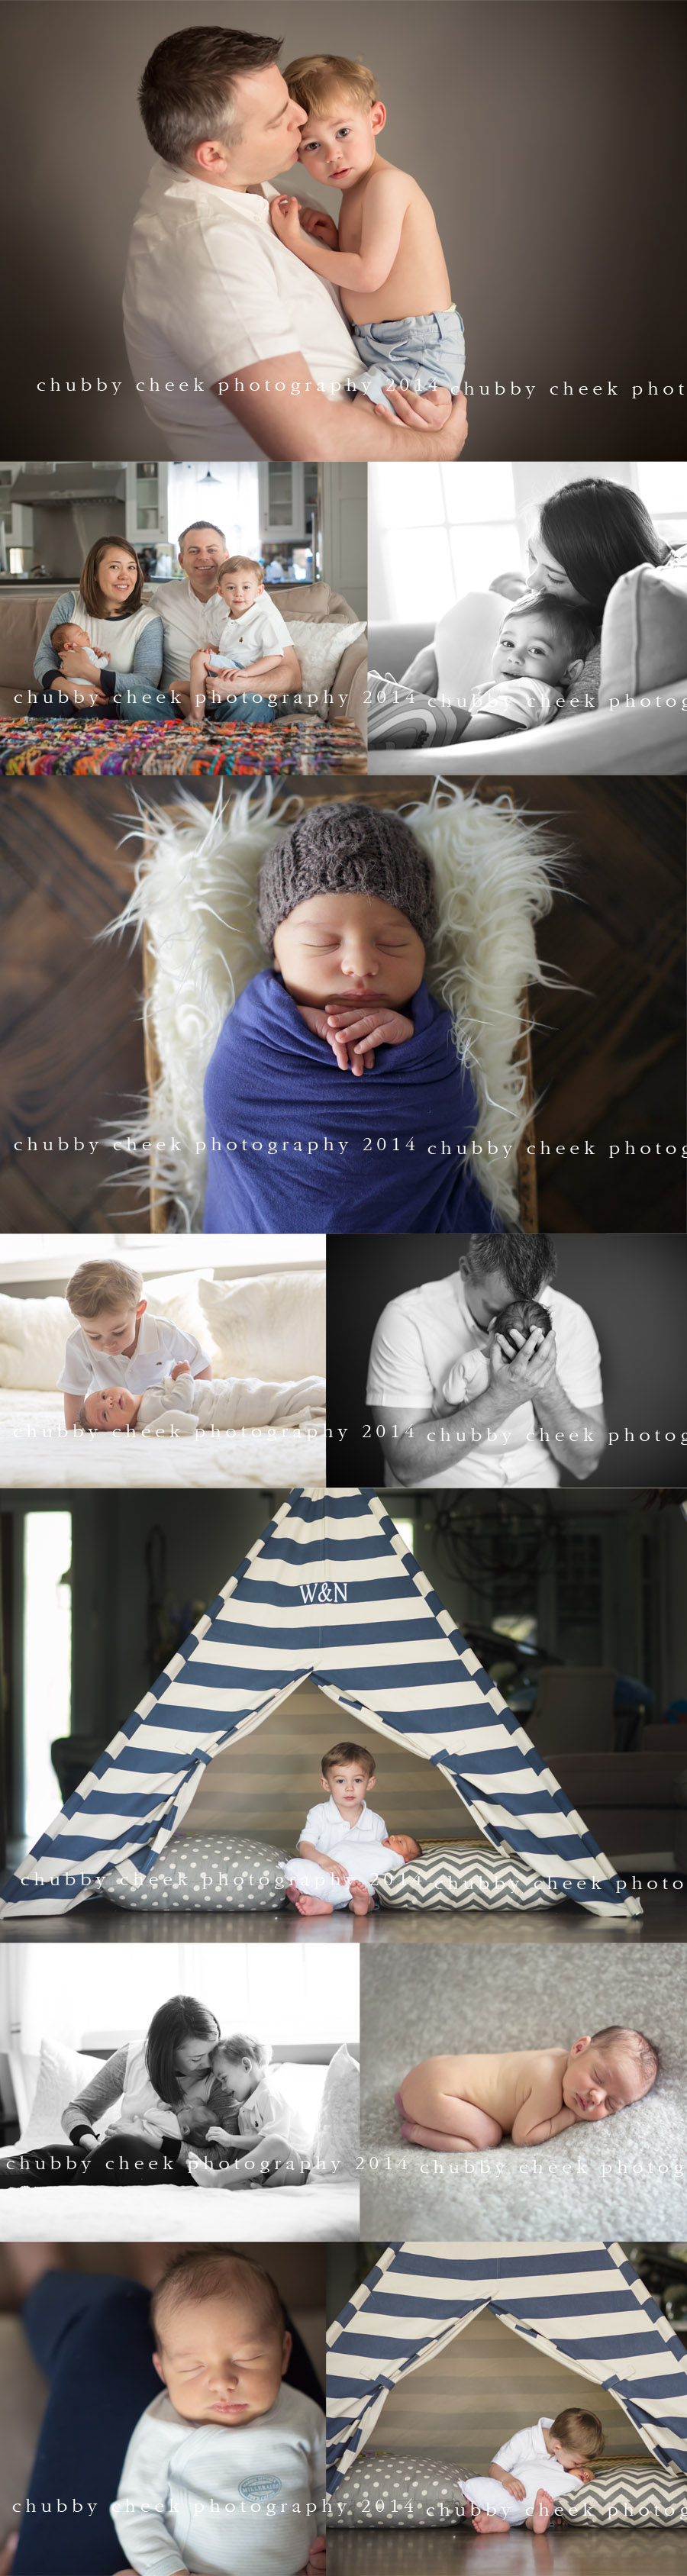 chubby cheek photography in home newborn photographer